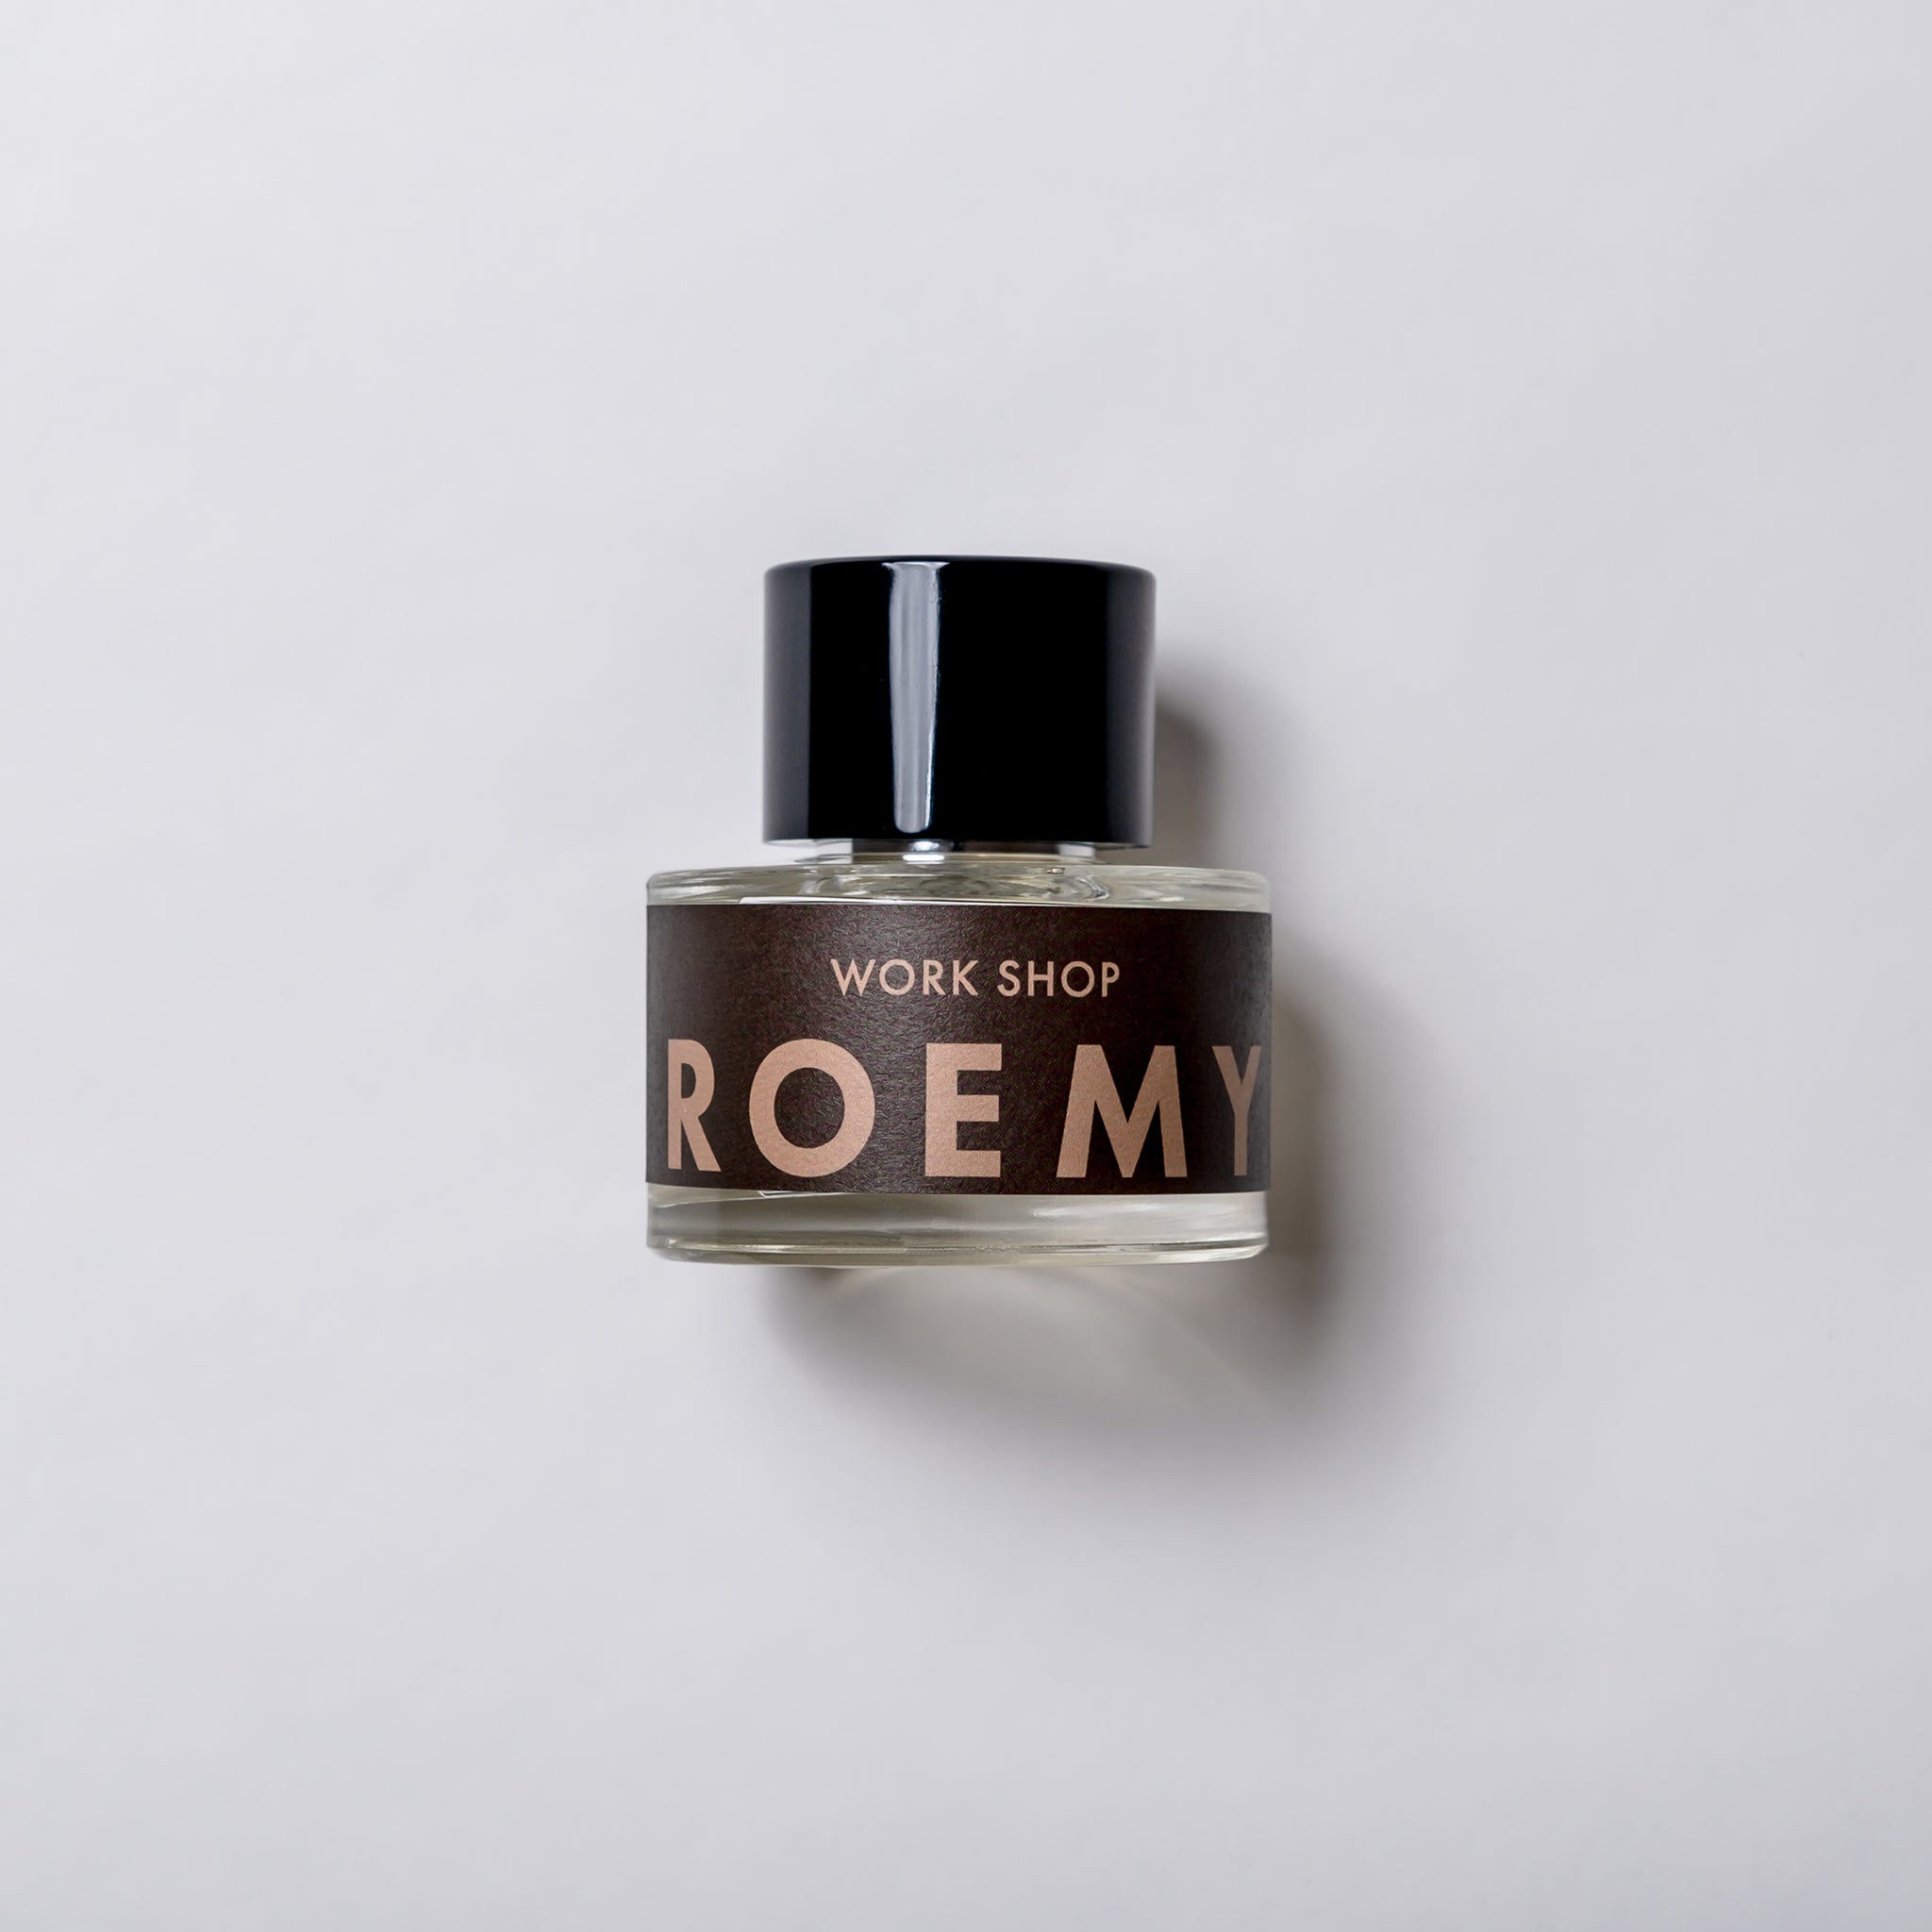 ROEMY Work Shop 55mL Parfum - top down